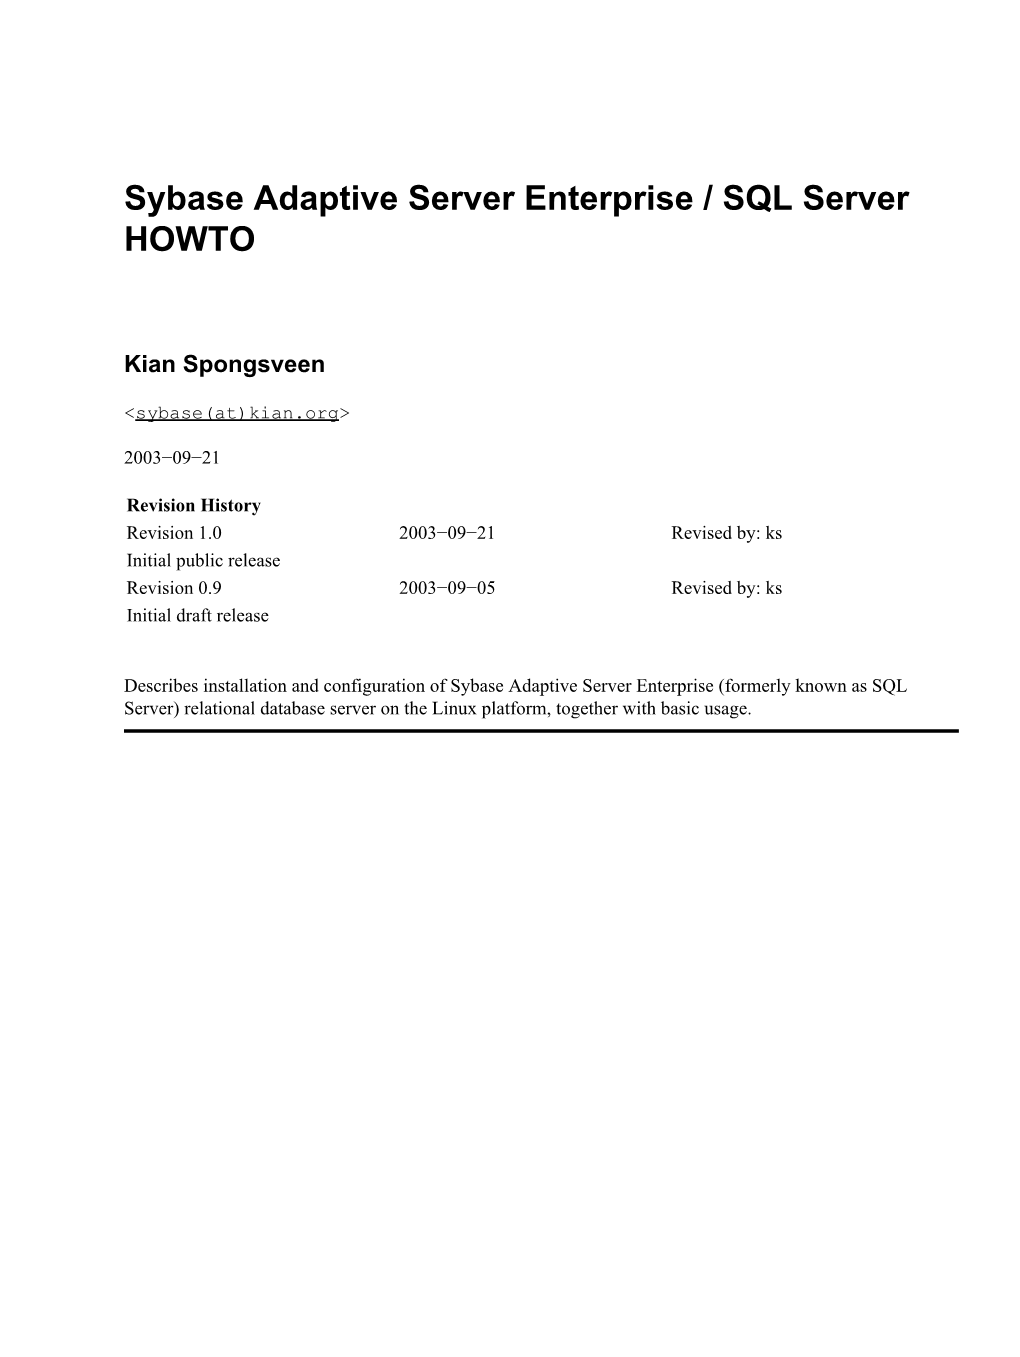 Sybase Adaptive Server Enterprise / SQL Server HOWTO